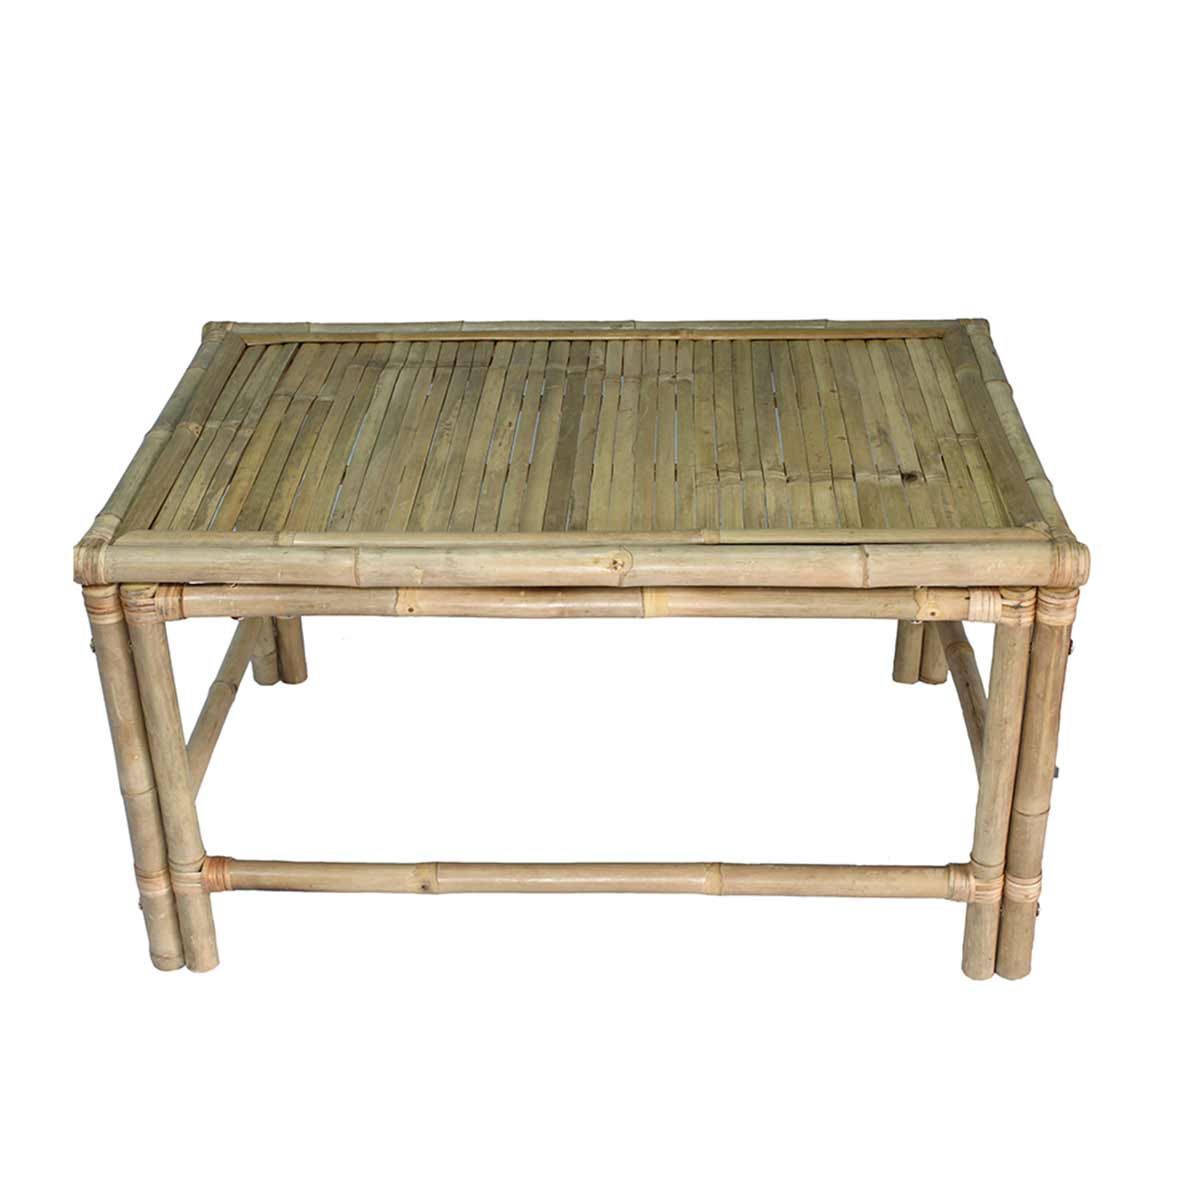 Table basse rectangulaire en bambou nat